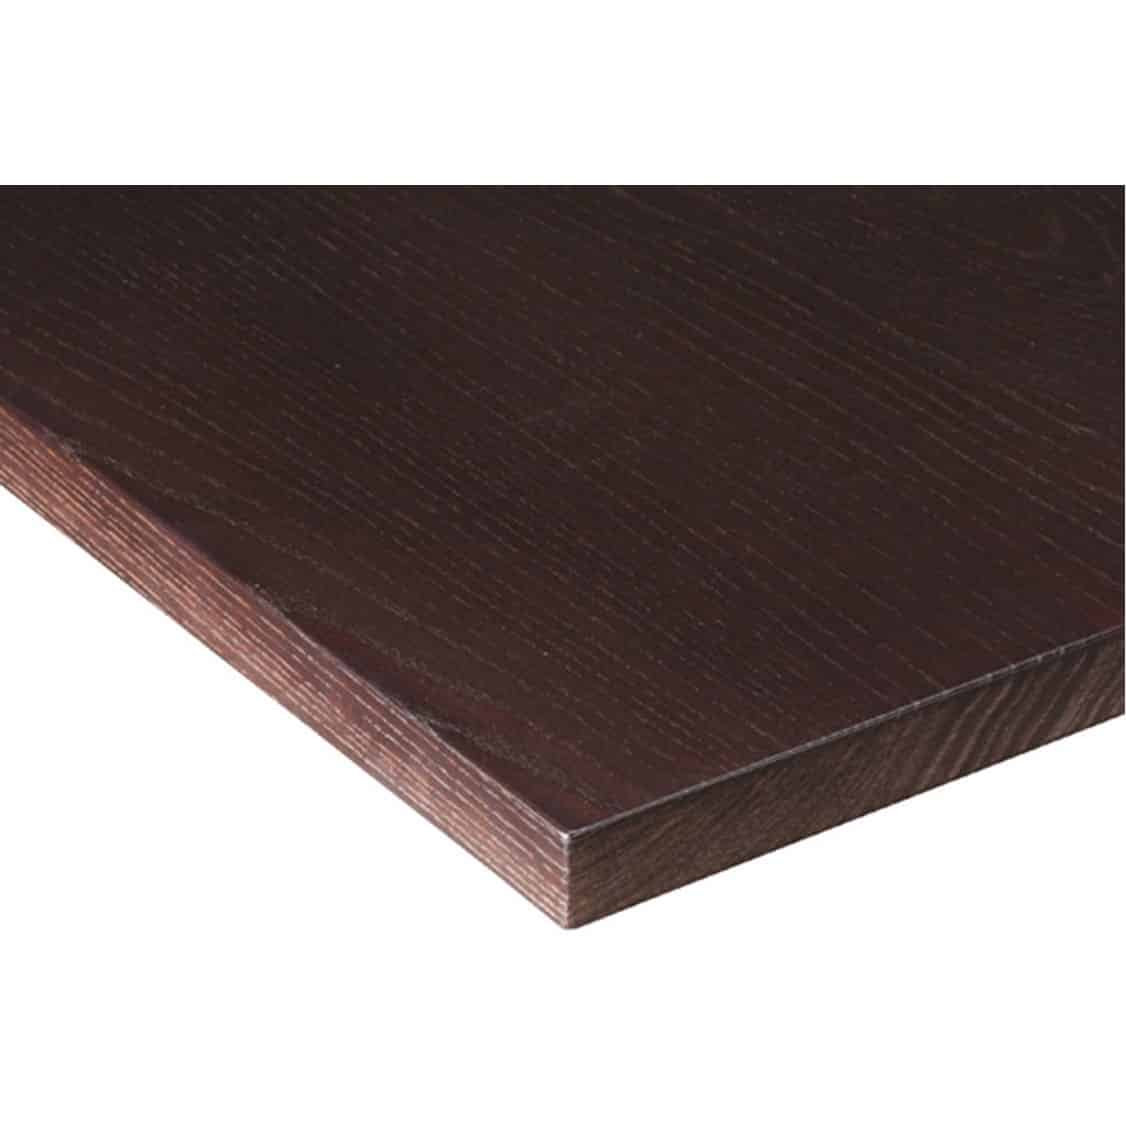 Solid Wood Tabletops Ashwood DeFrae Contract Furniture Wenge